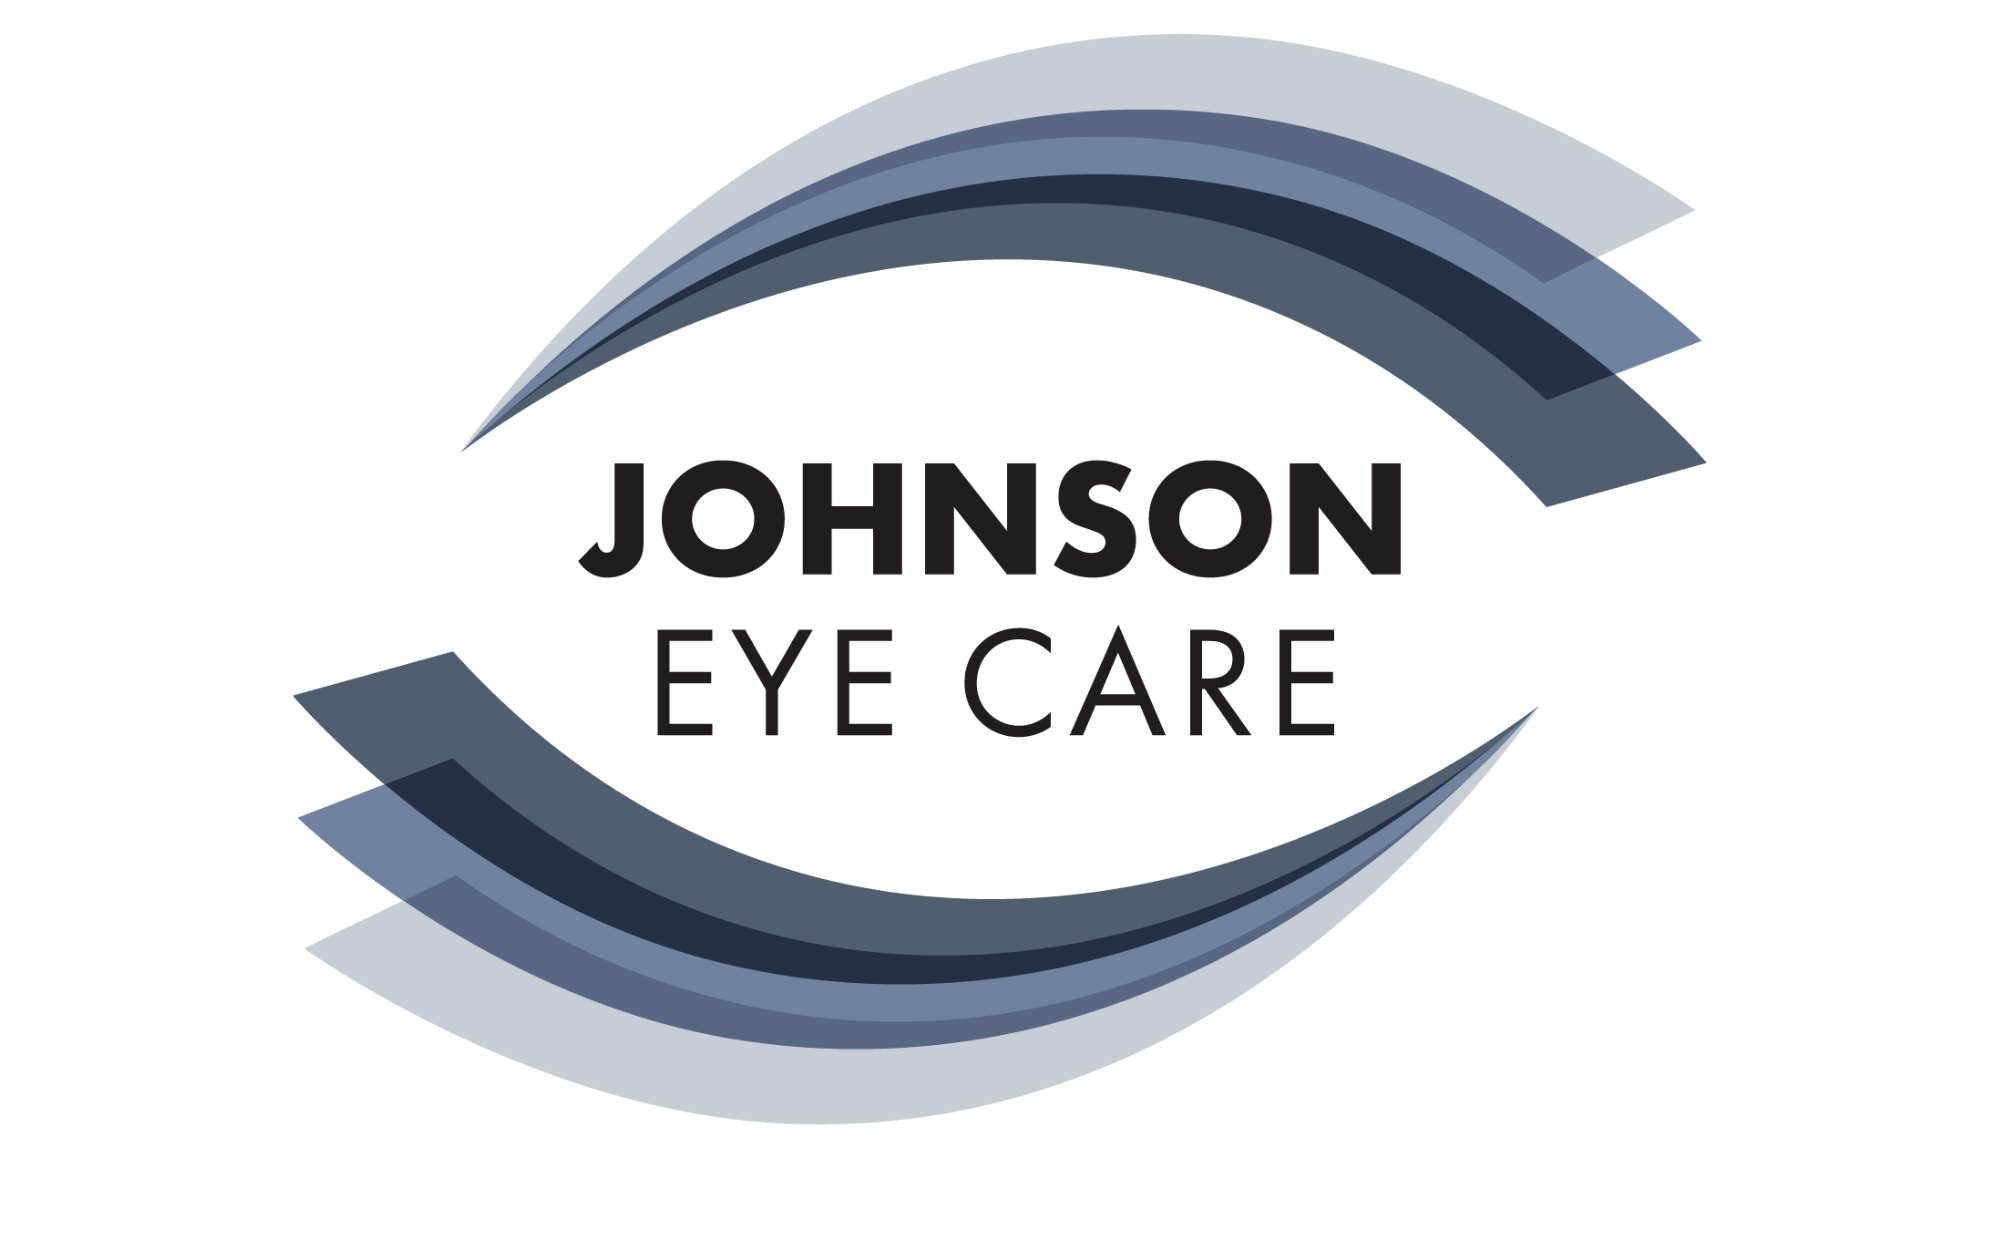 Johnson Eye Care